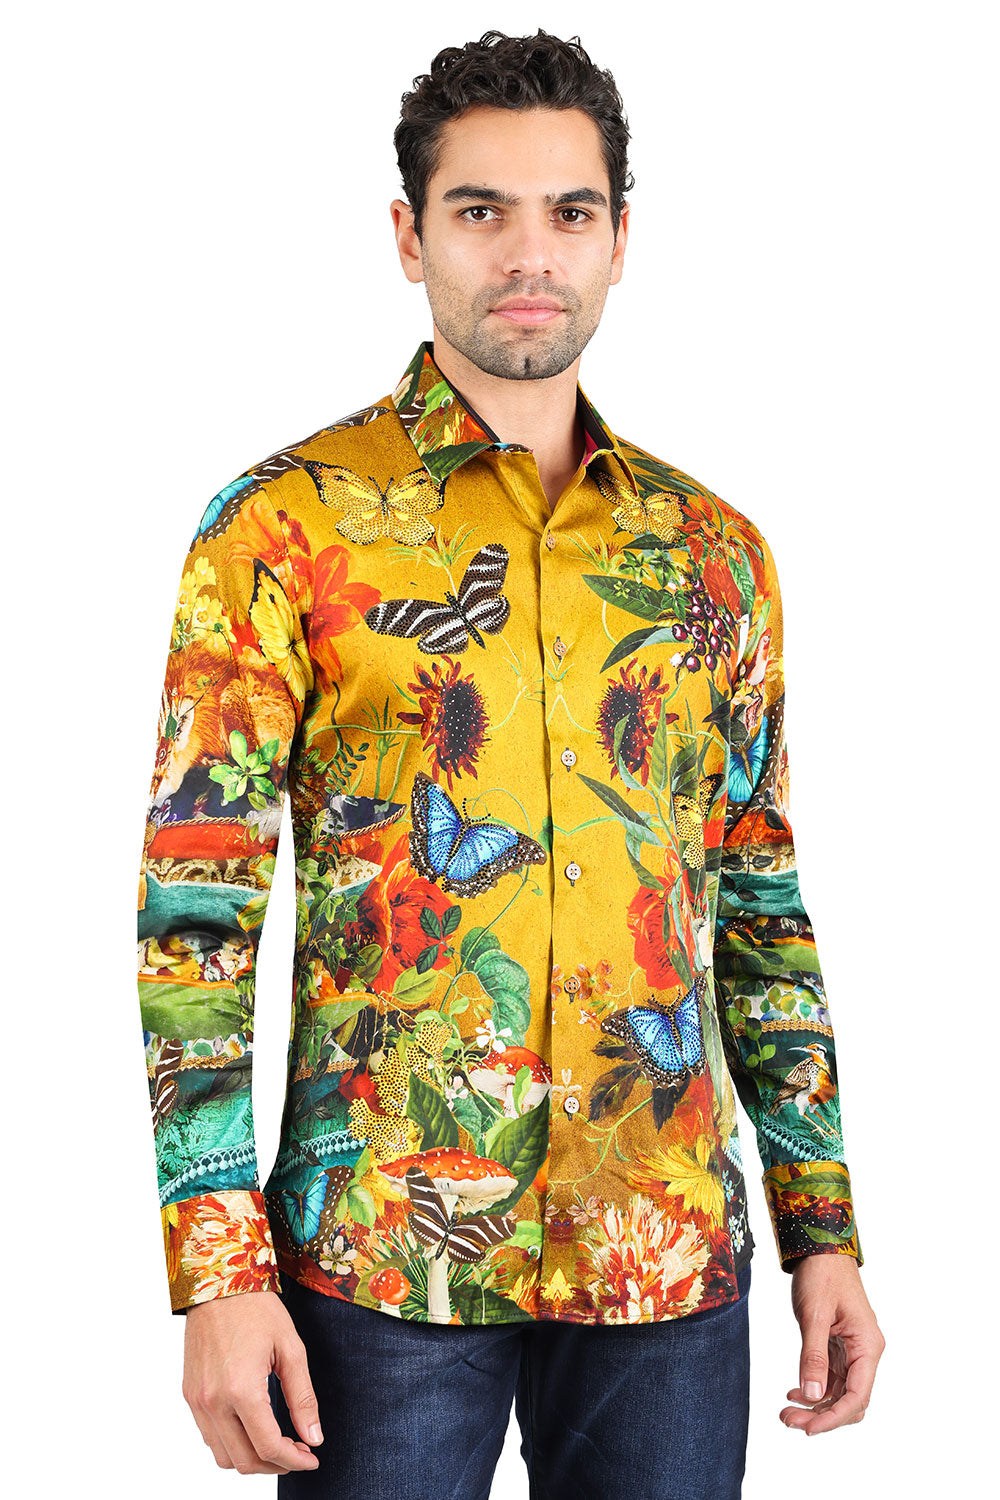 BARABAS men's Rhinestone Butterflies Floral long sleeve shirts 2SPR30 Multicolor